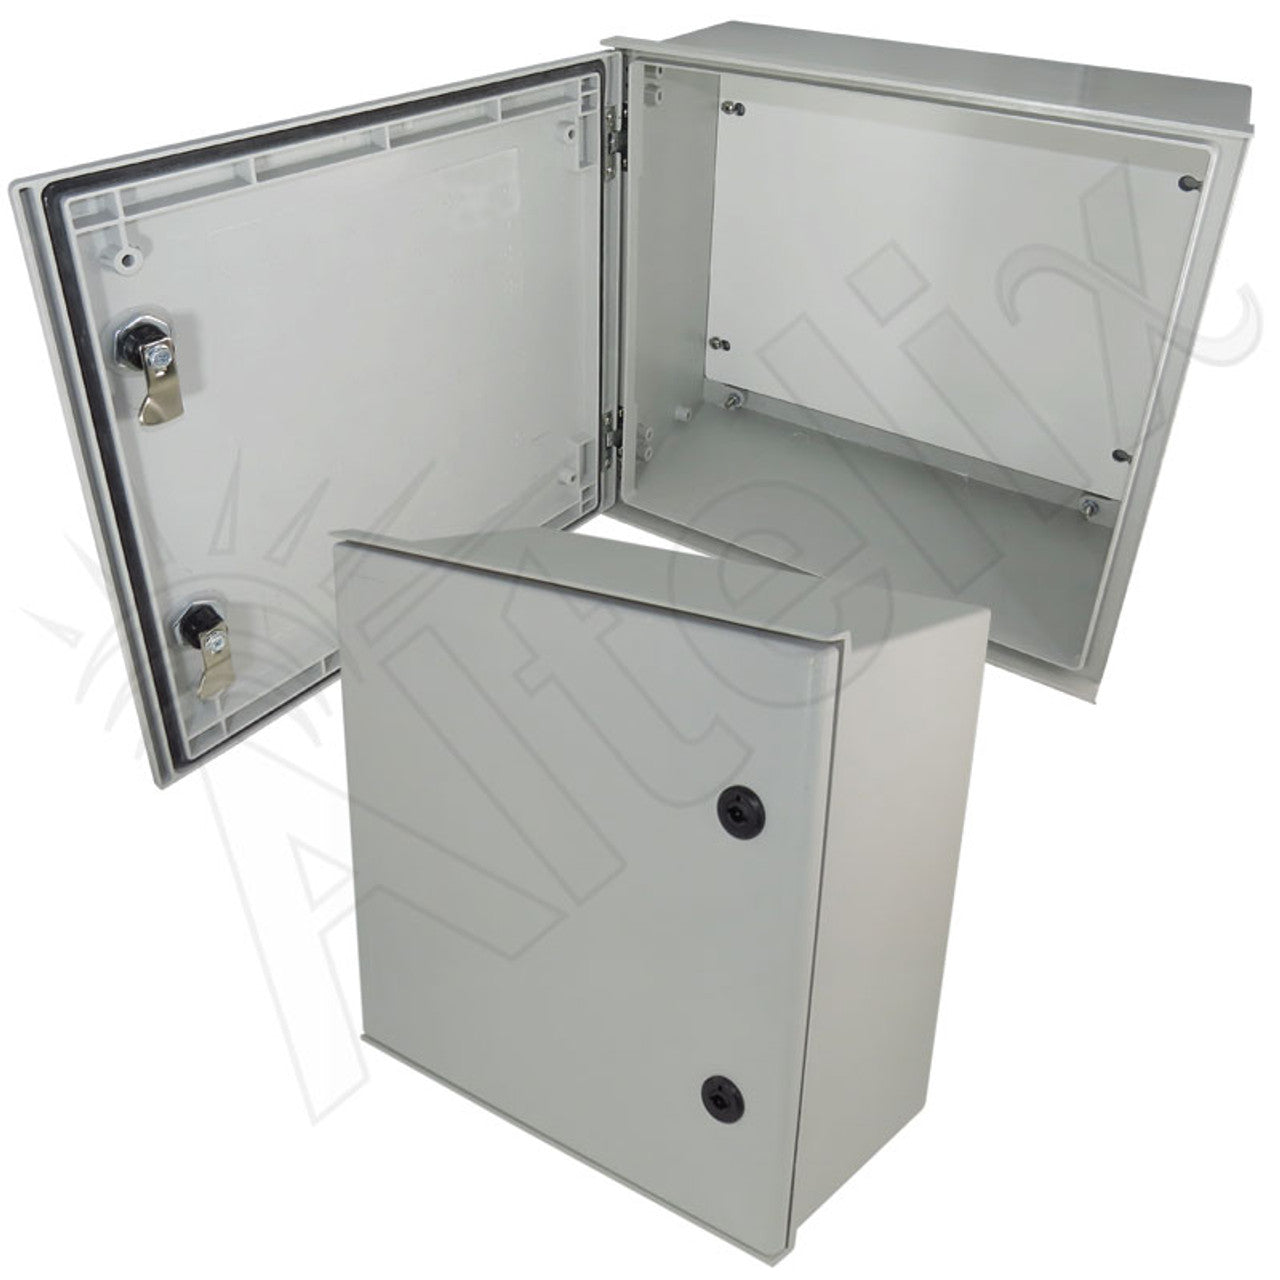 Altelix NEMA 3X Fiberglass Indoor / Outdoor RF Transparent WiFi Access Point Enclosure with Non-Metallic Equipment Mounting Plate